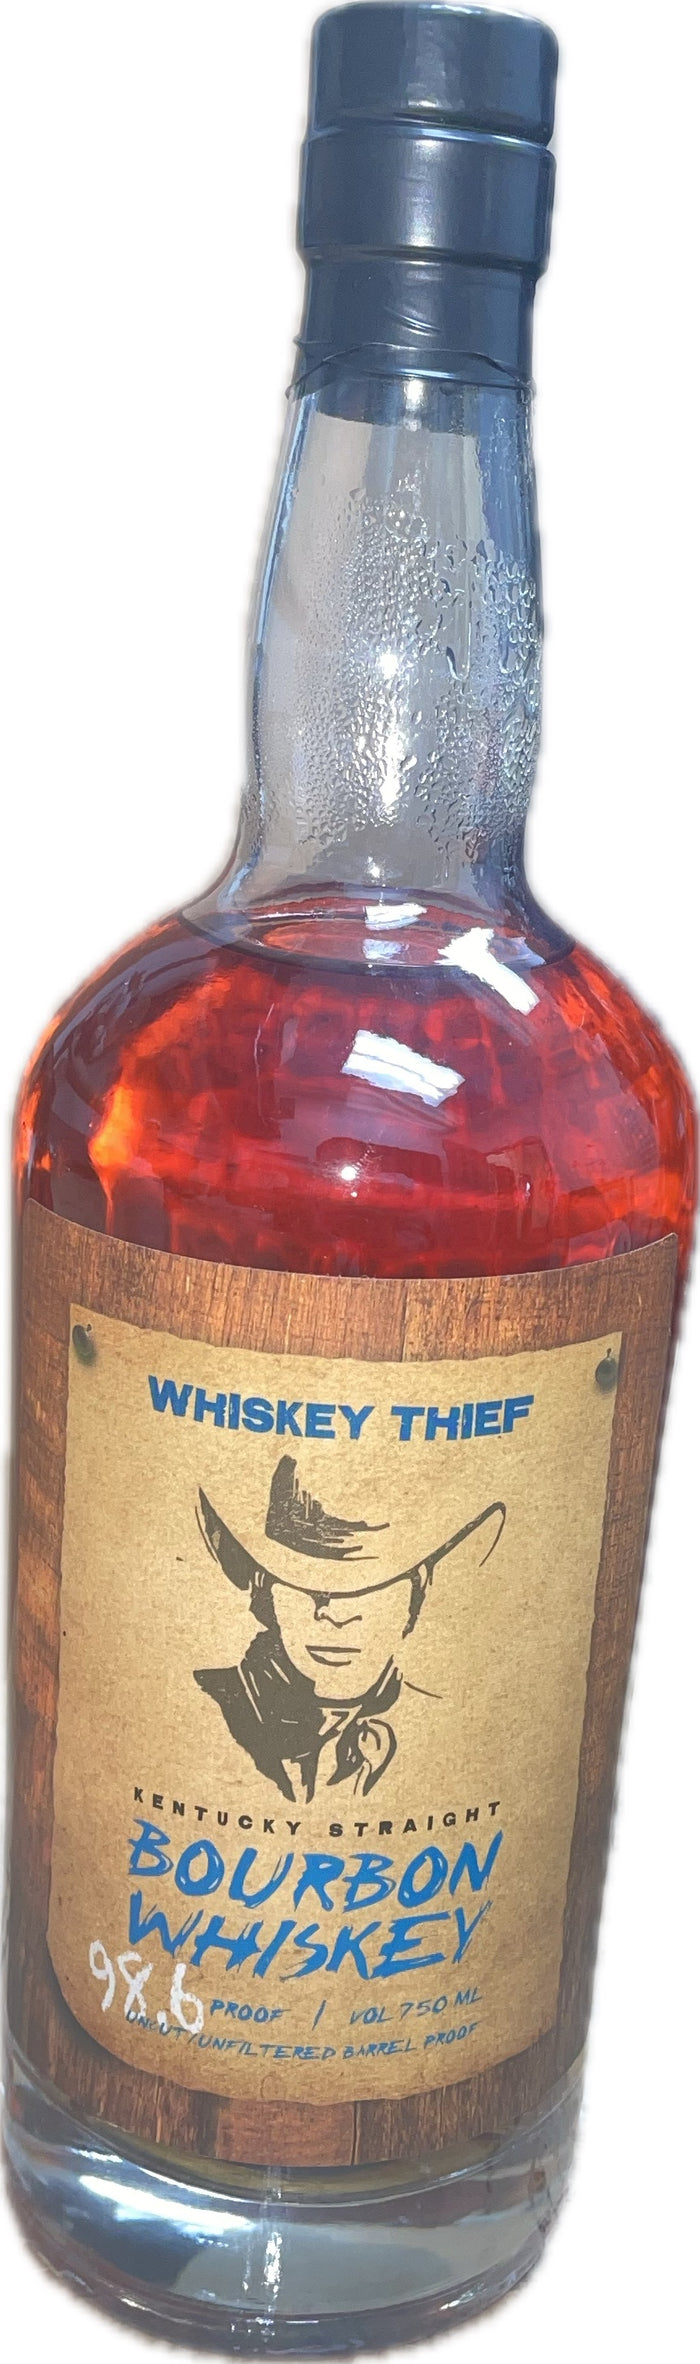 Whisky Thief Kentucky Straight Bourbon Whiskey